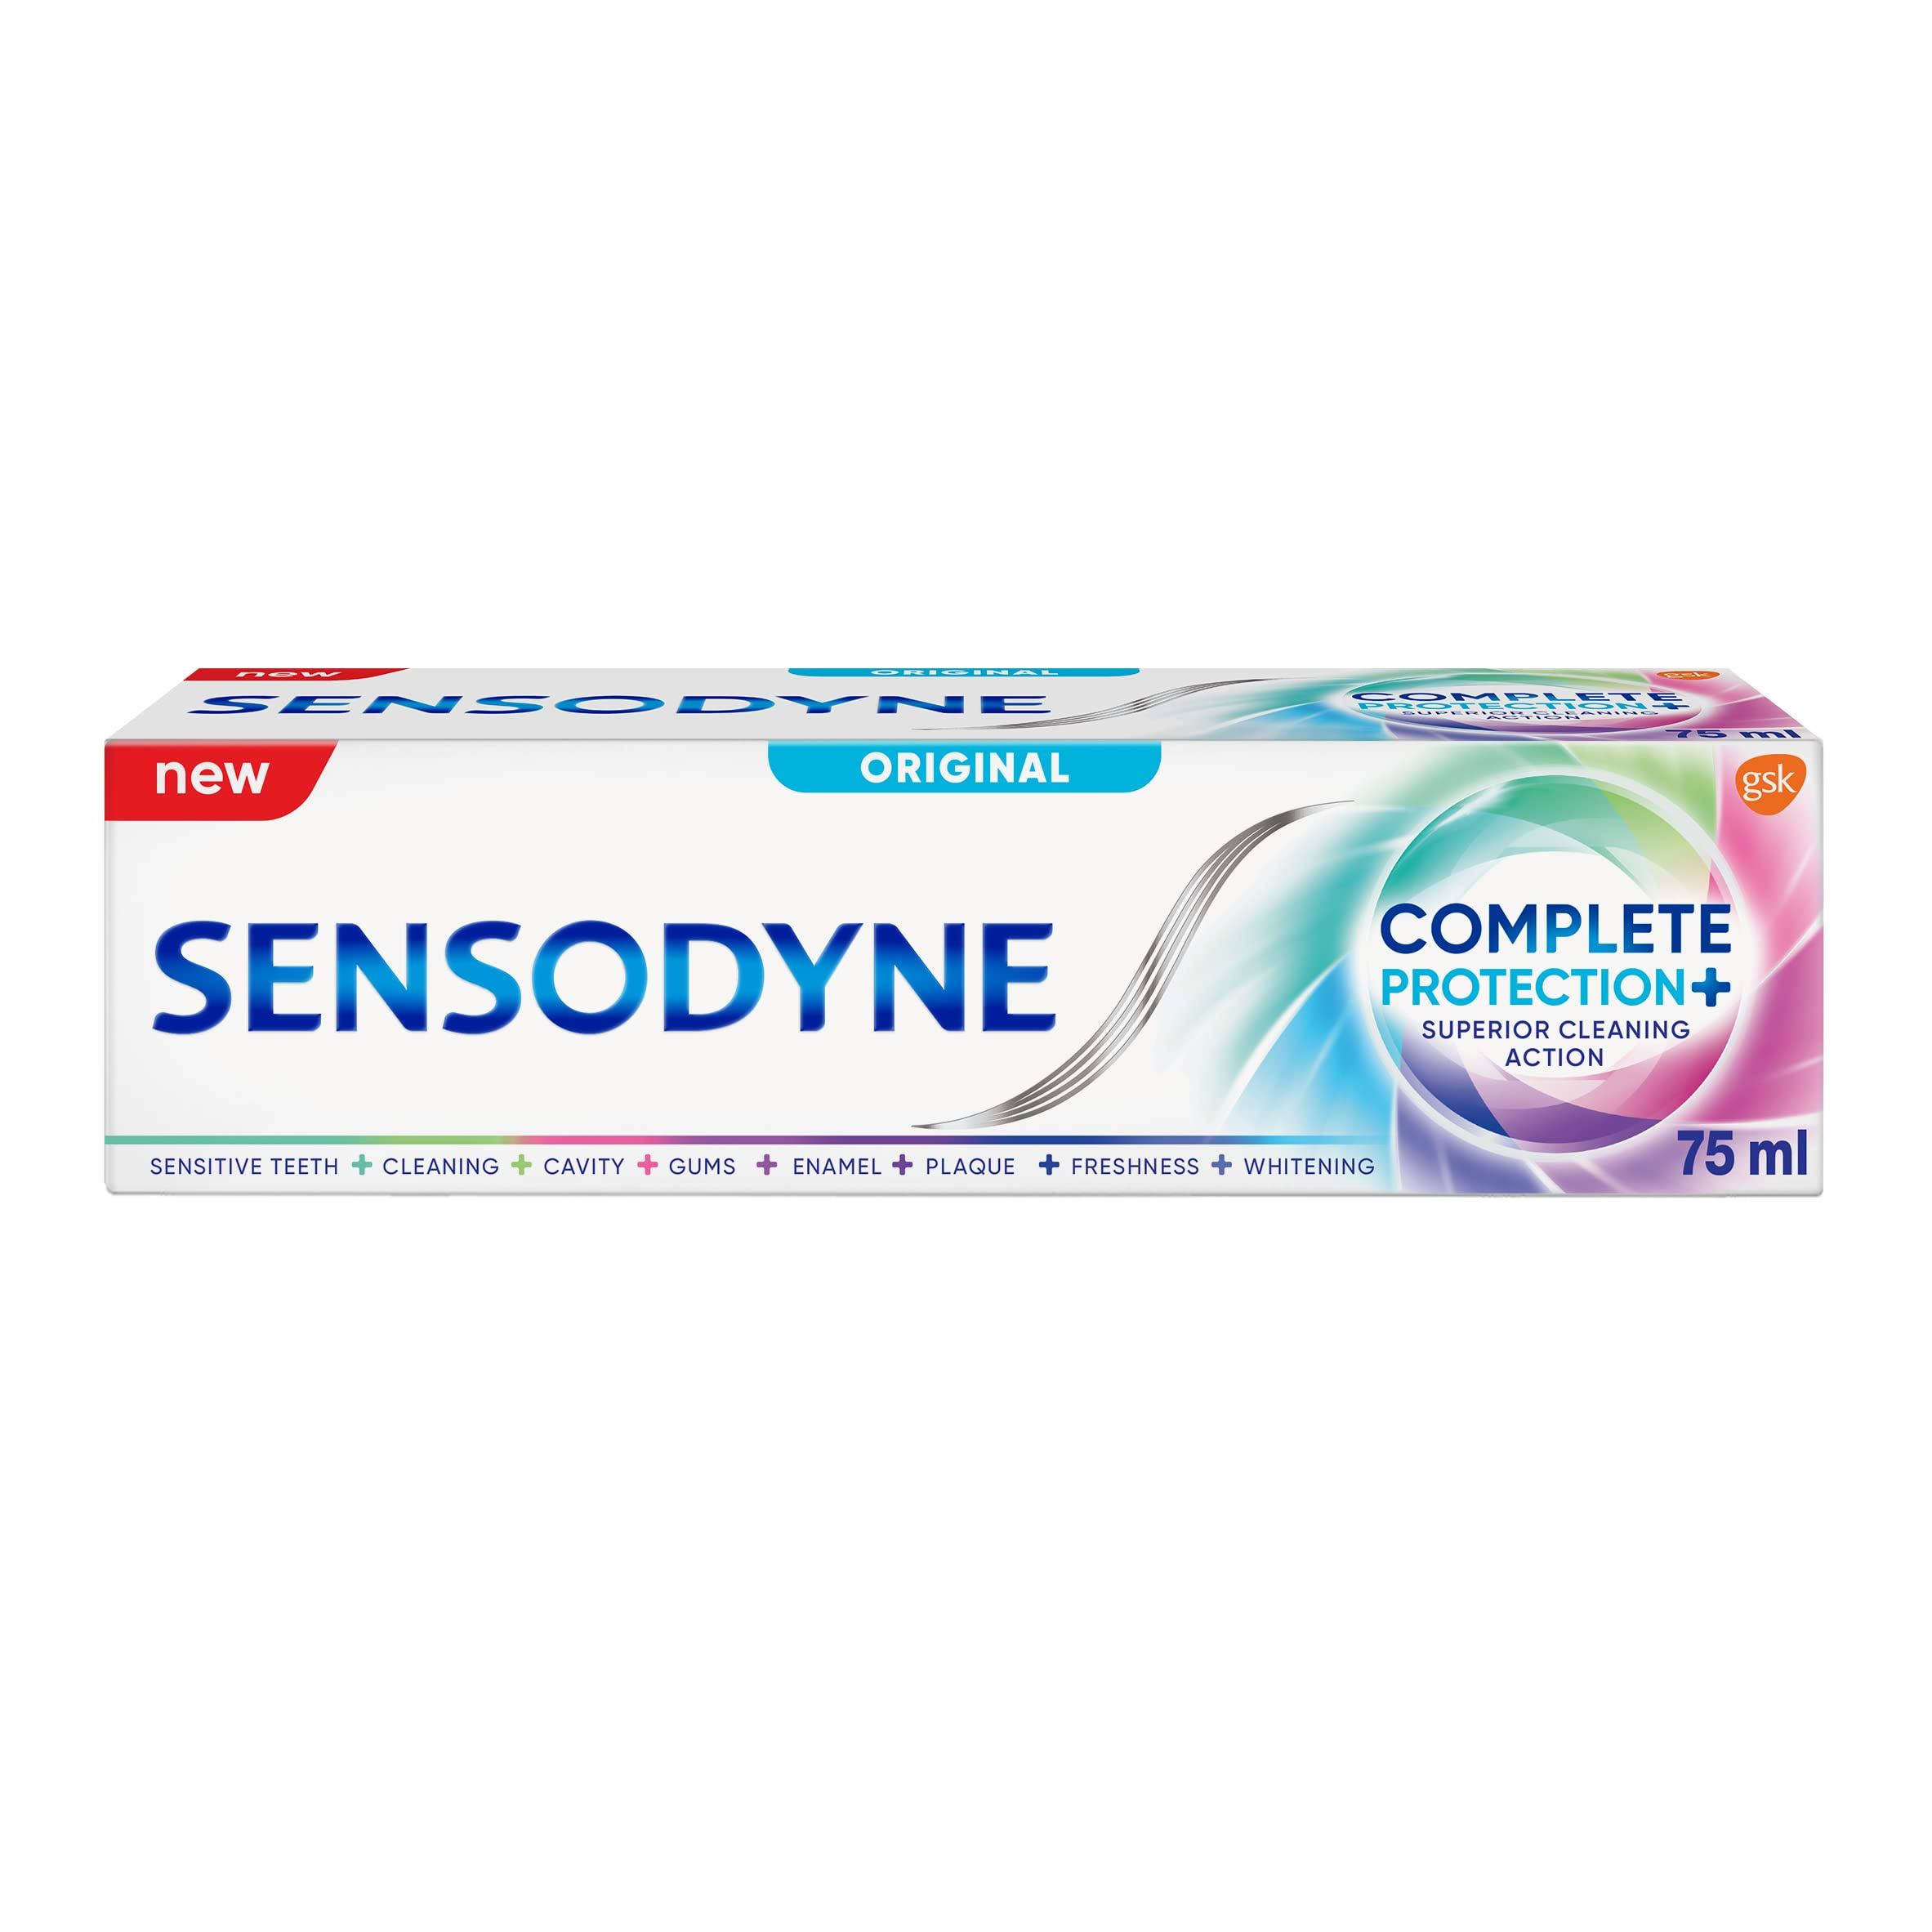 Sensodyne Complete Protection Plus Toothpaste - 75ml